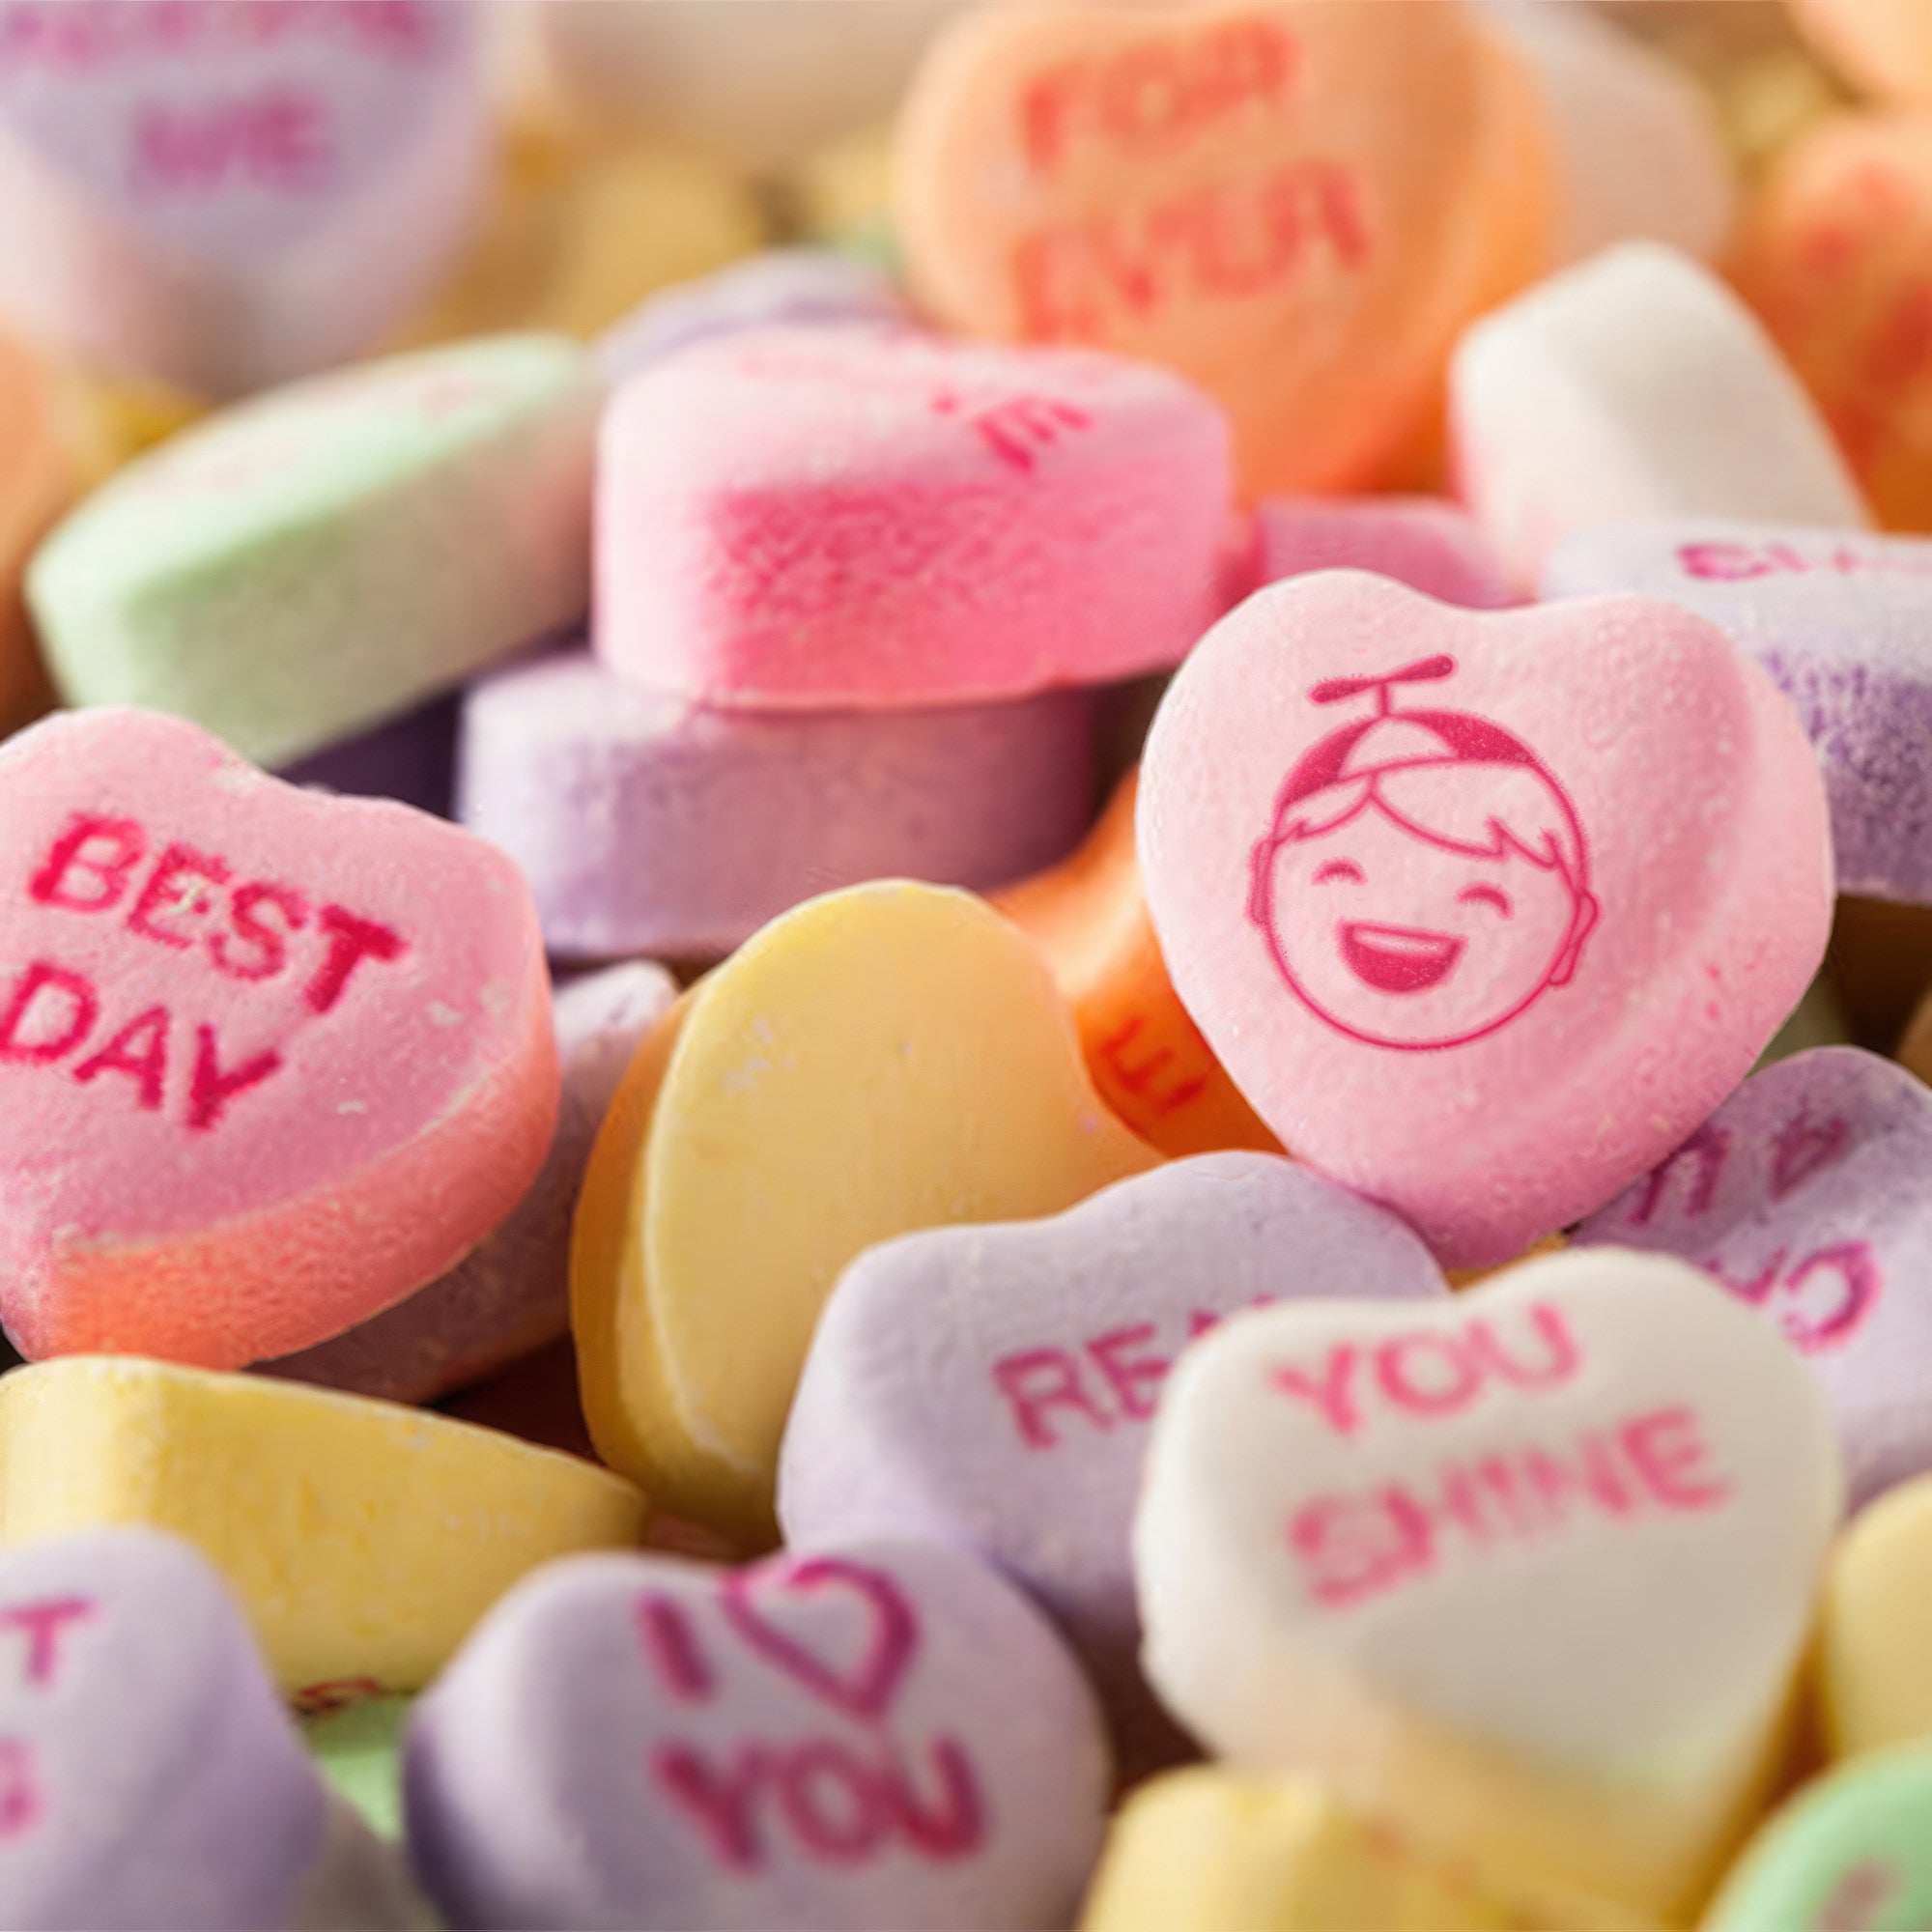 Nostalgia Candy: Sweethearts